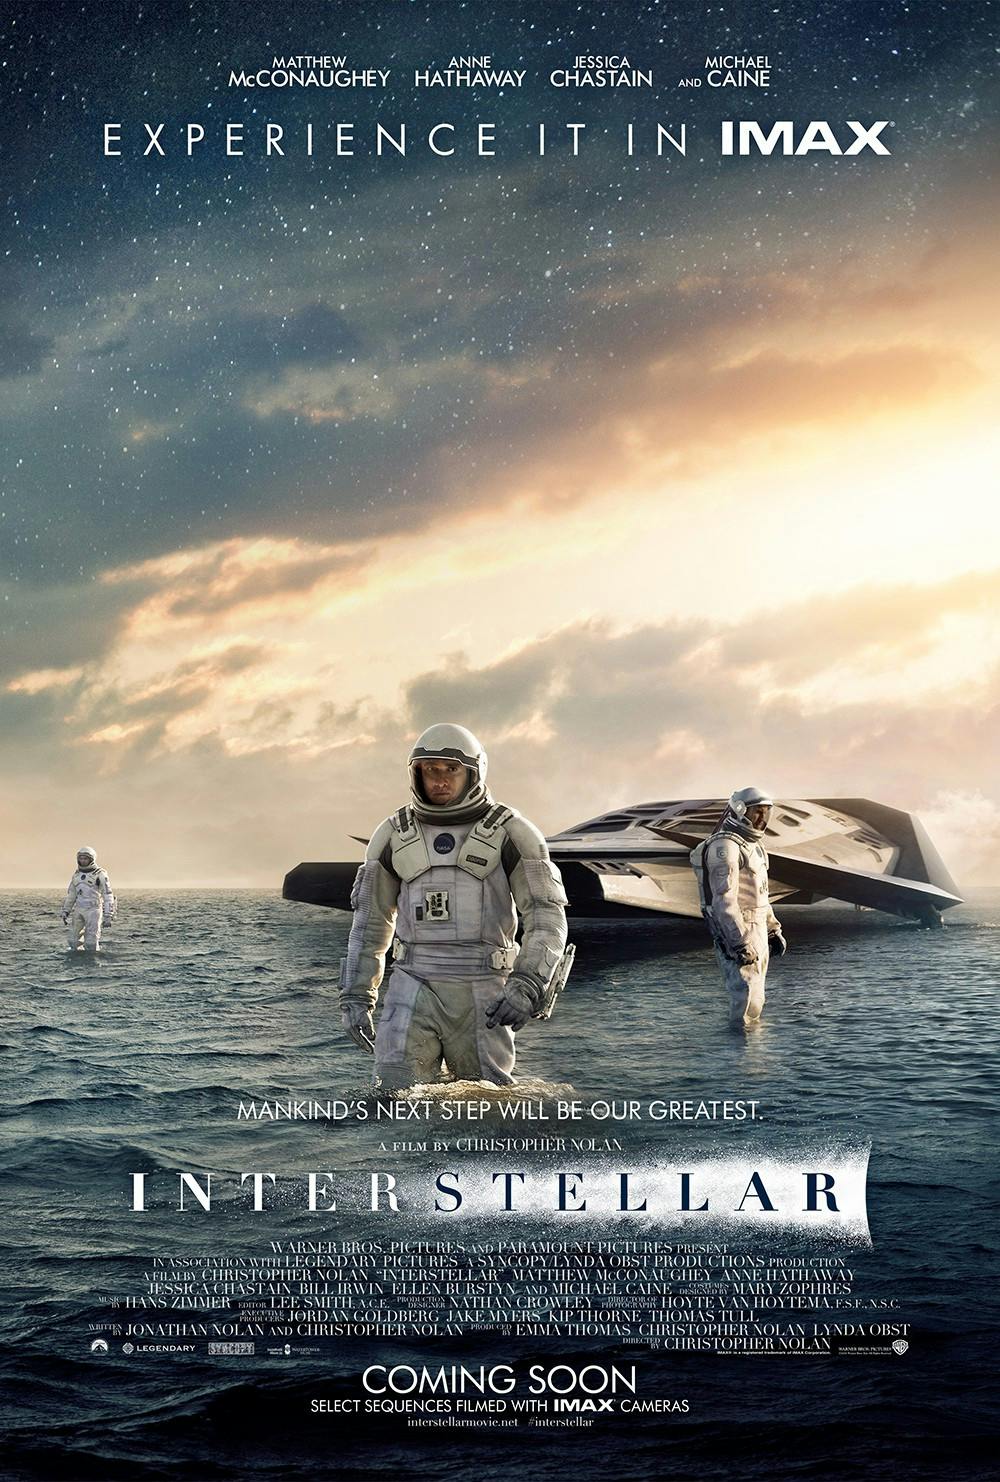 Interstellar” brings cinematic revolution in SF genre – tjTODAY